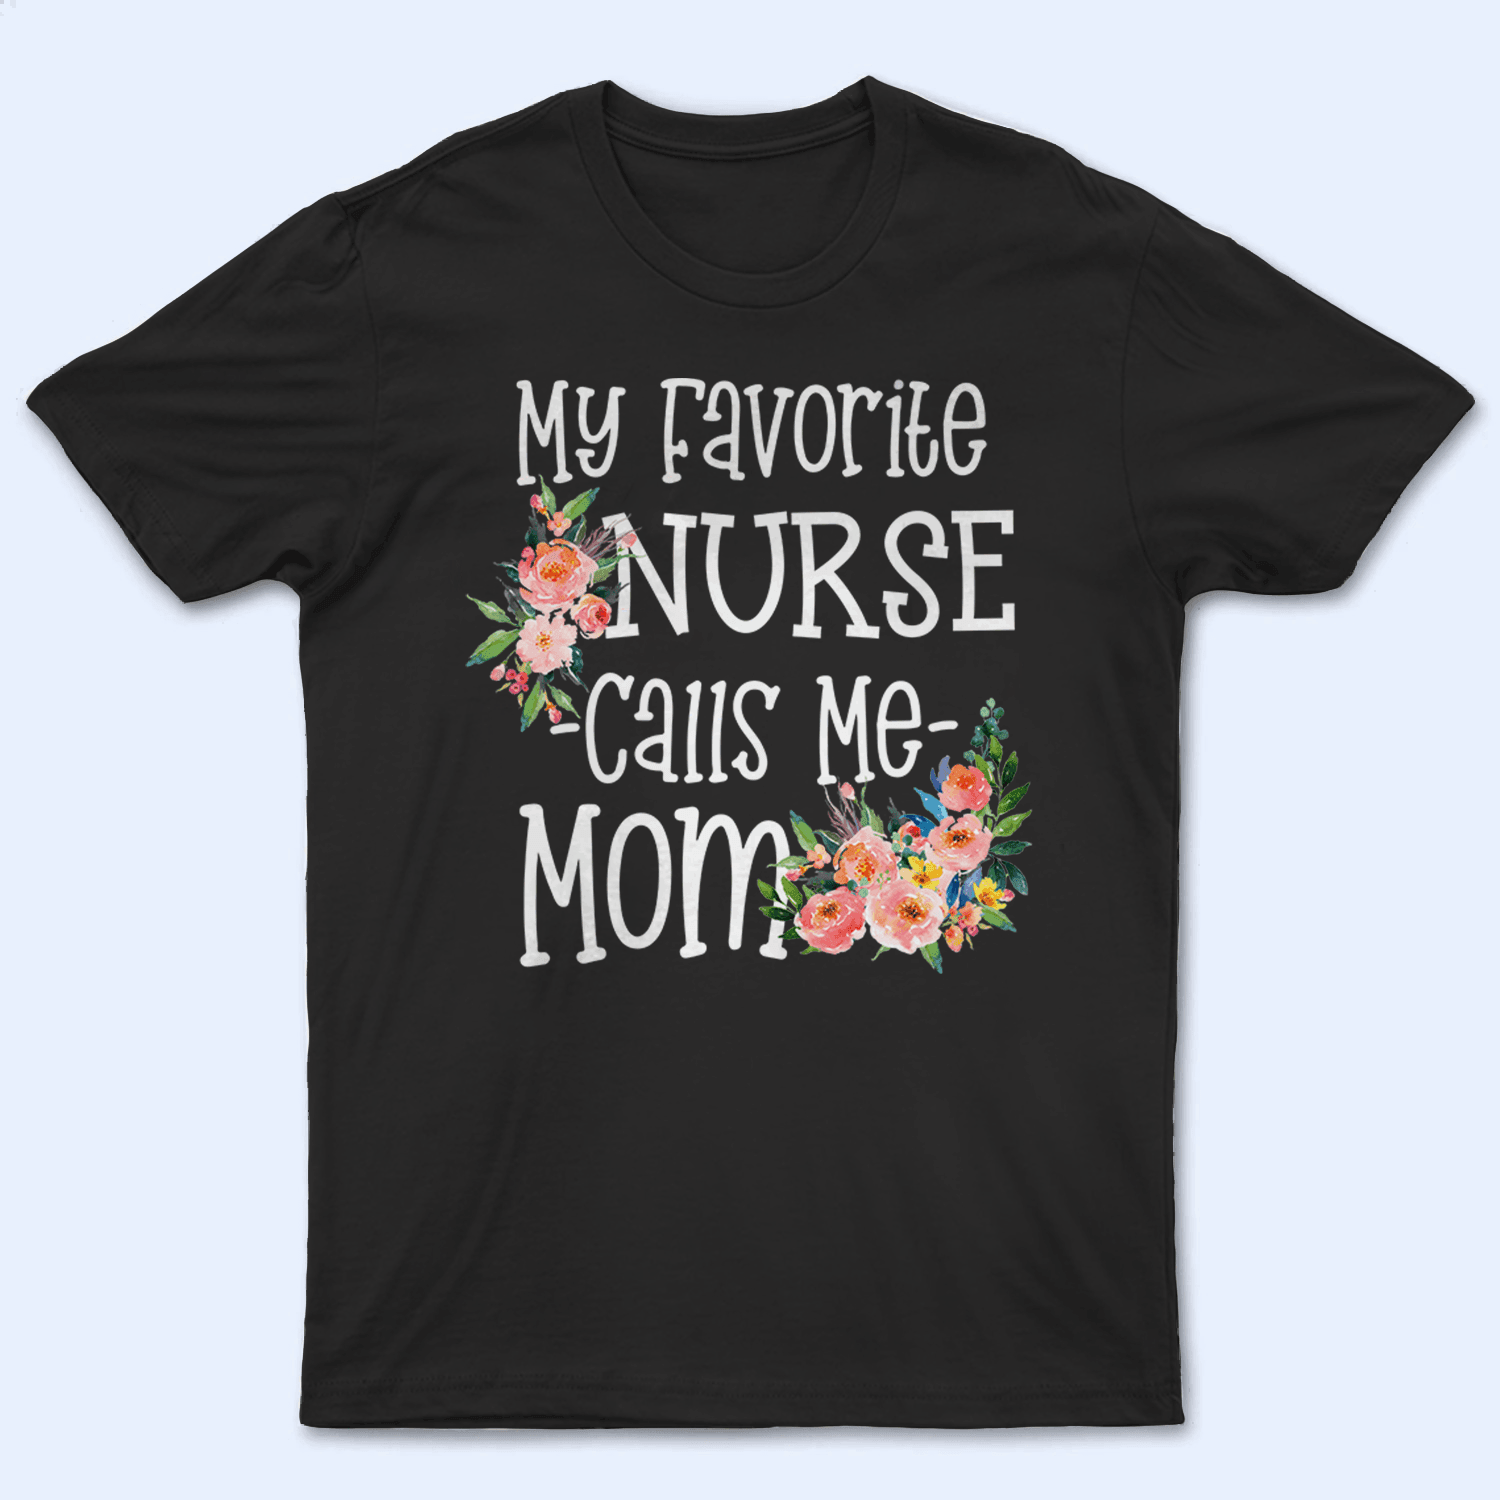 Nurse Mom - Personalized Custom T Shirt - Birthday, Loving, Funny Gift for Nurse, CNA, Healthcare, Registered RN